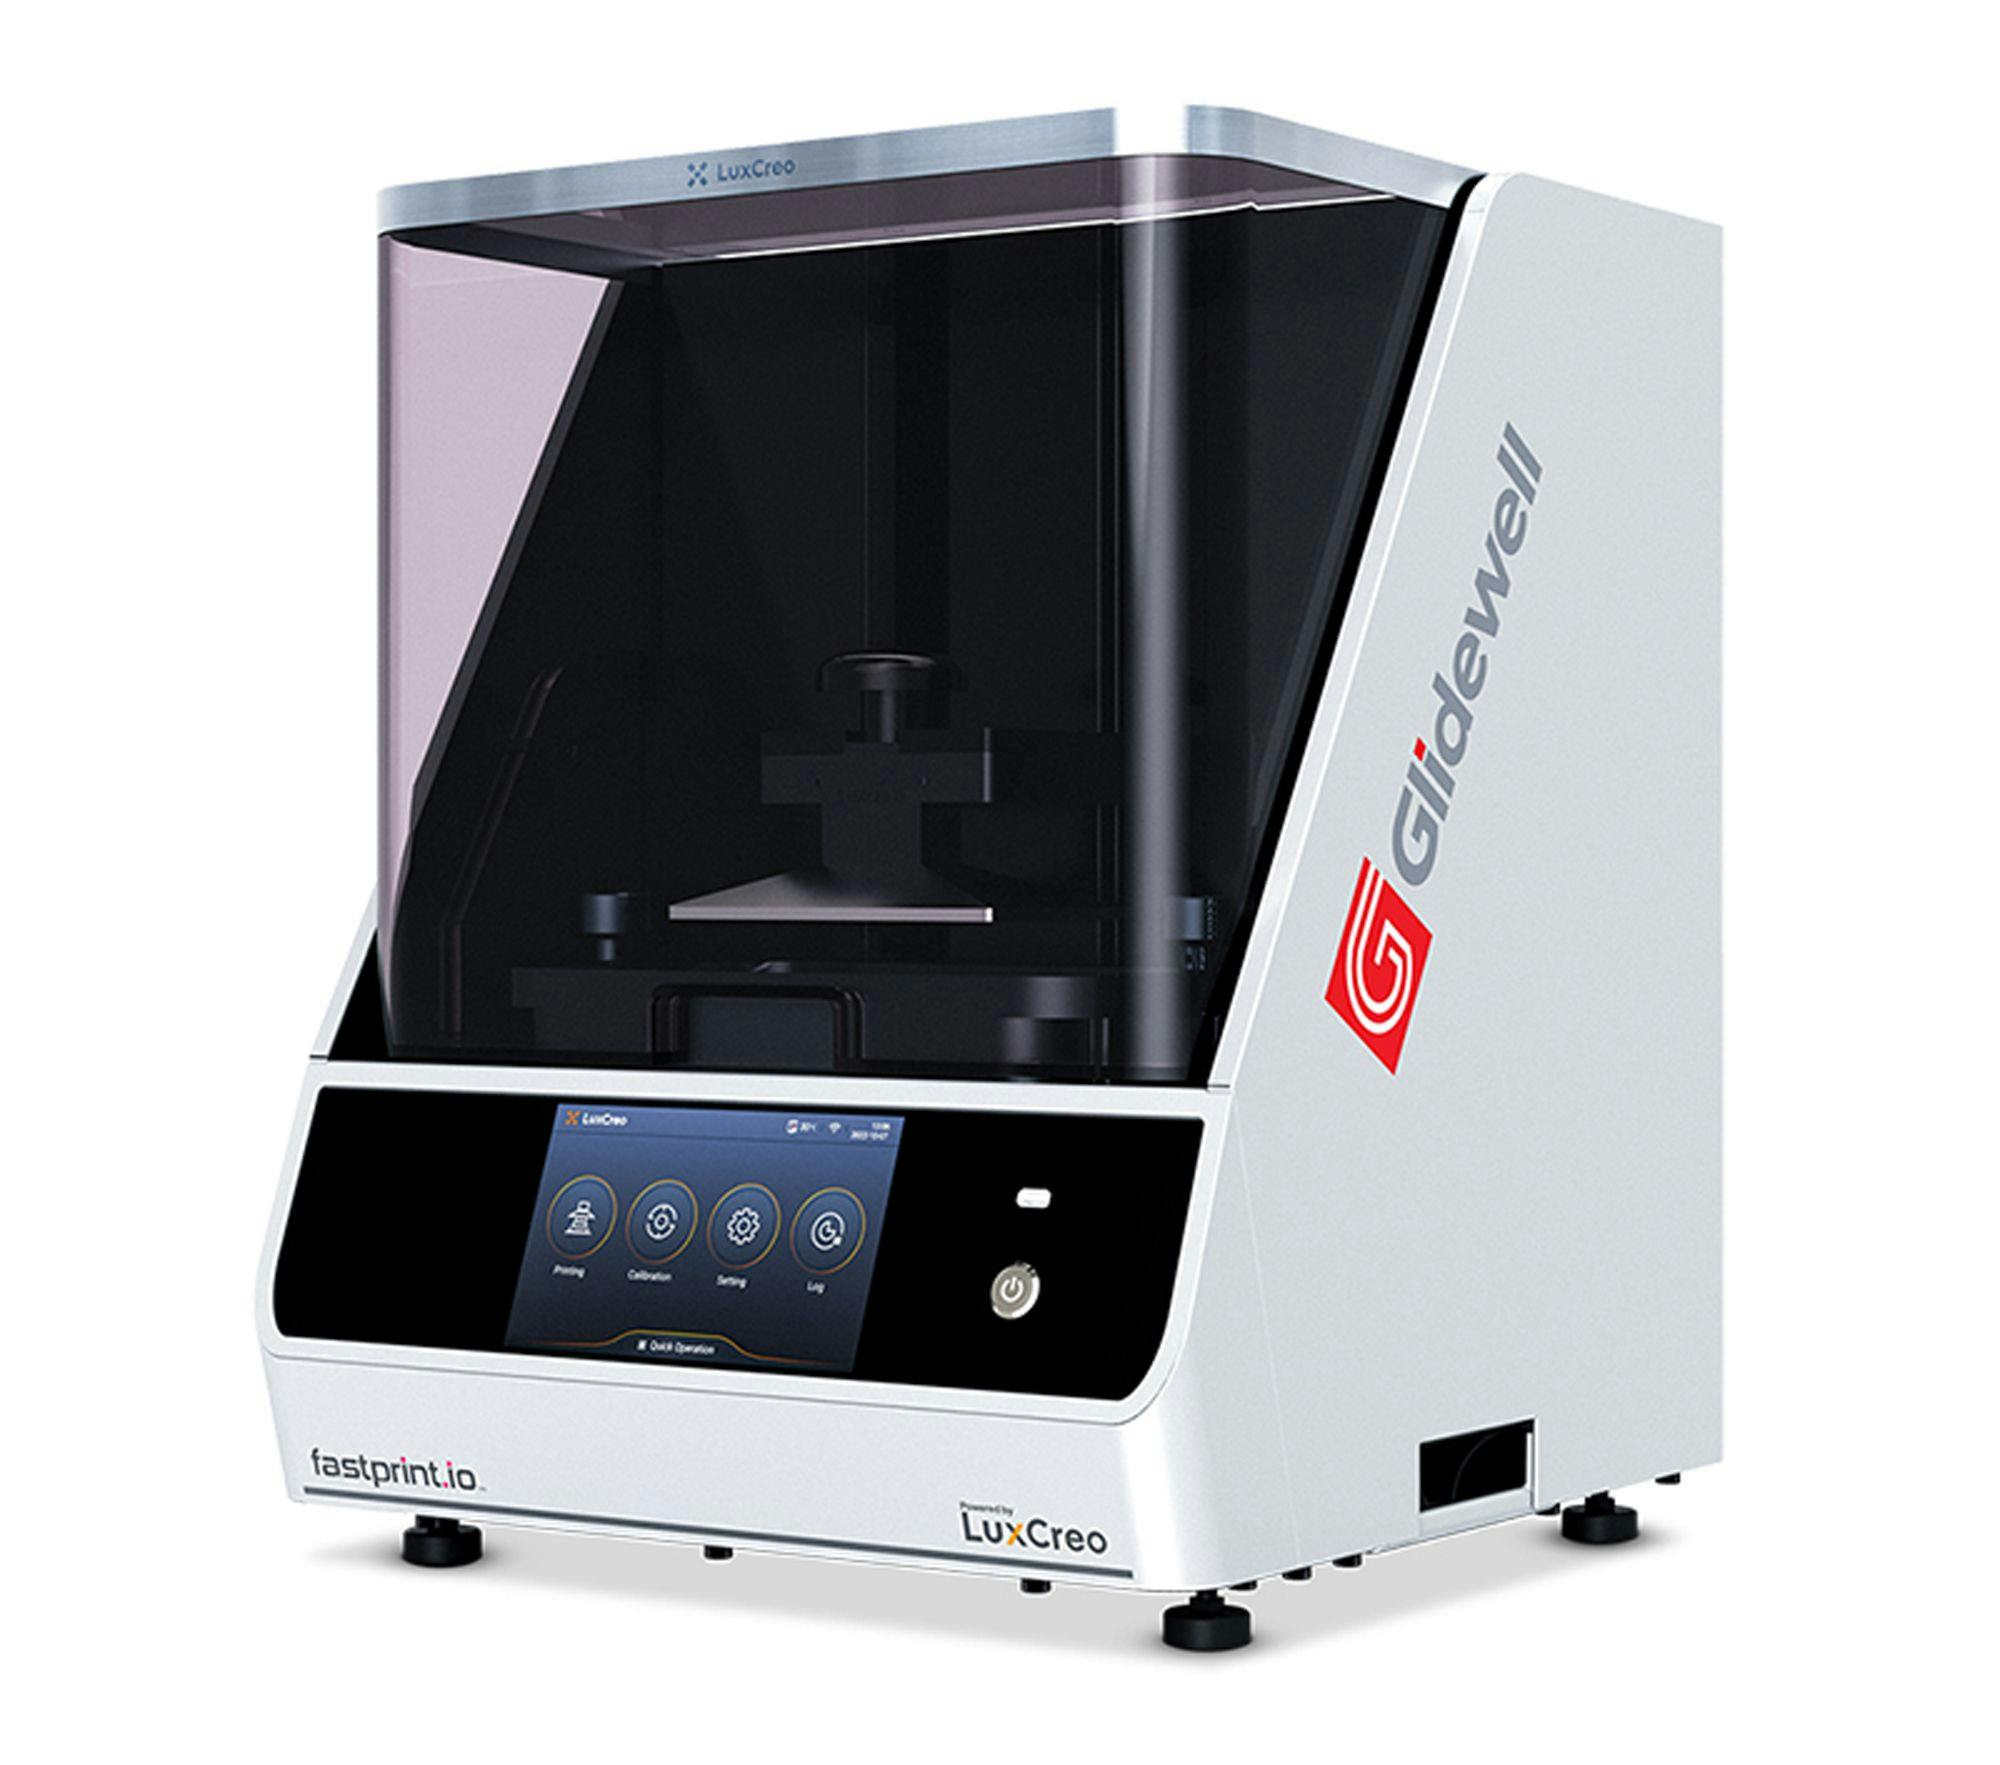 fastprint.io 3D Printing Solution. Image: © Glidewell